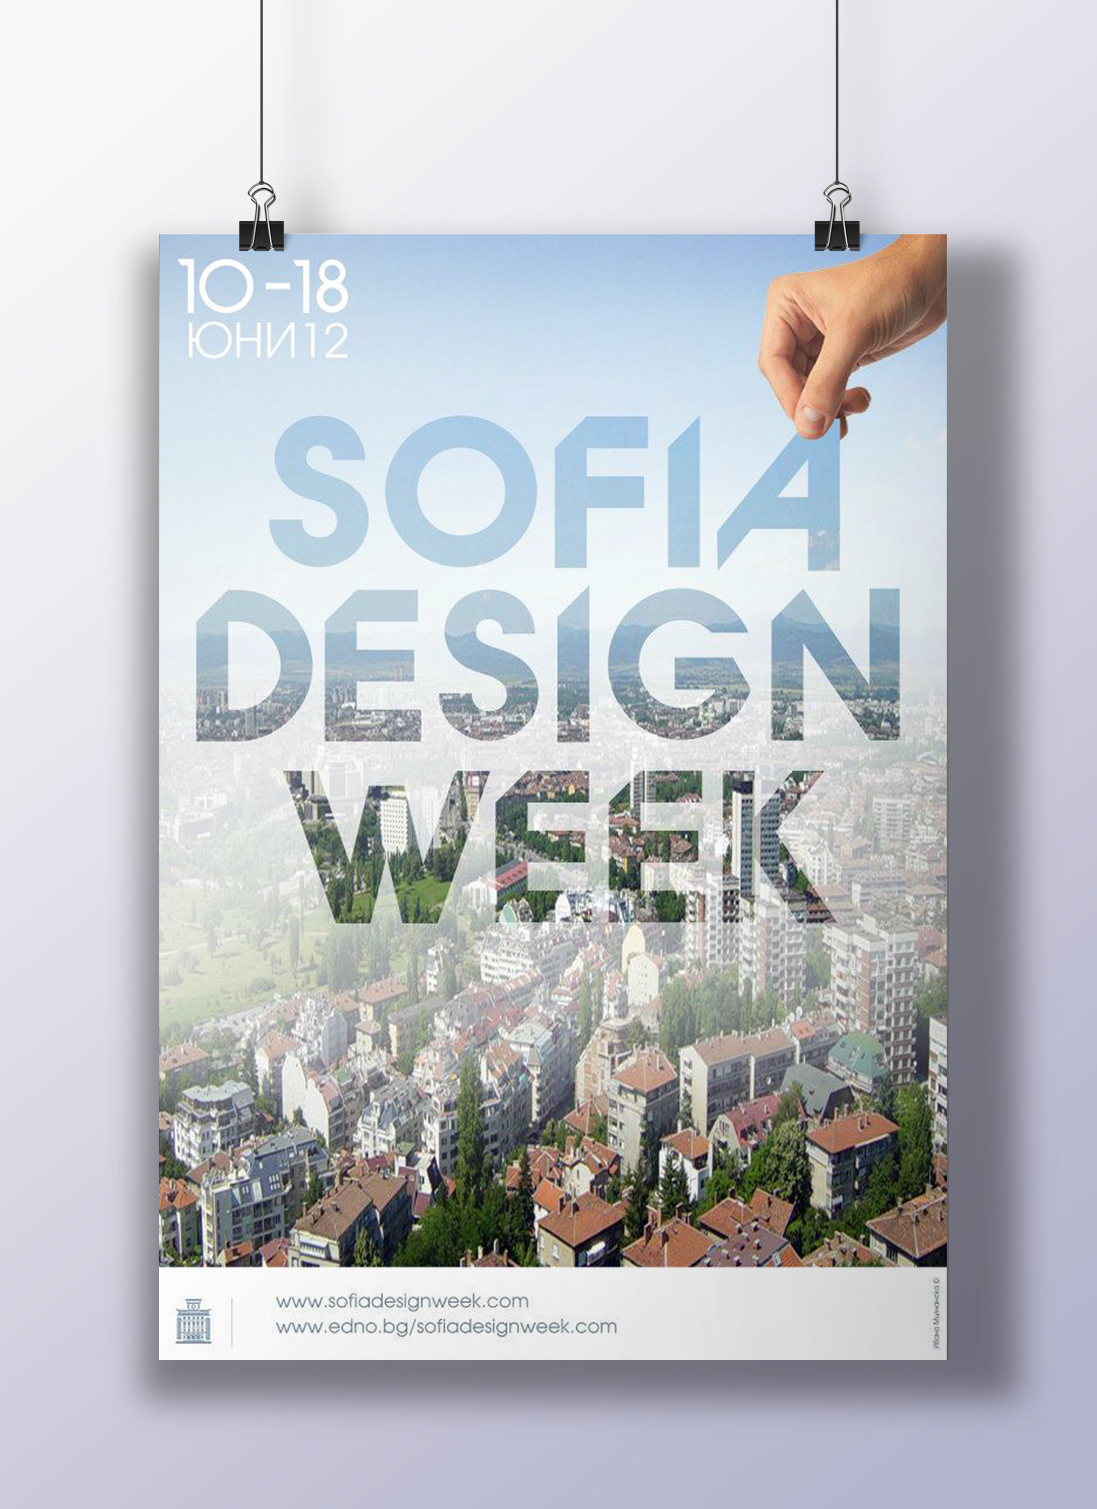 Sofia Design Week posters